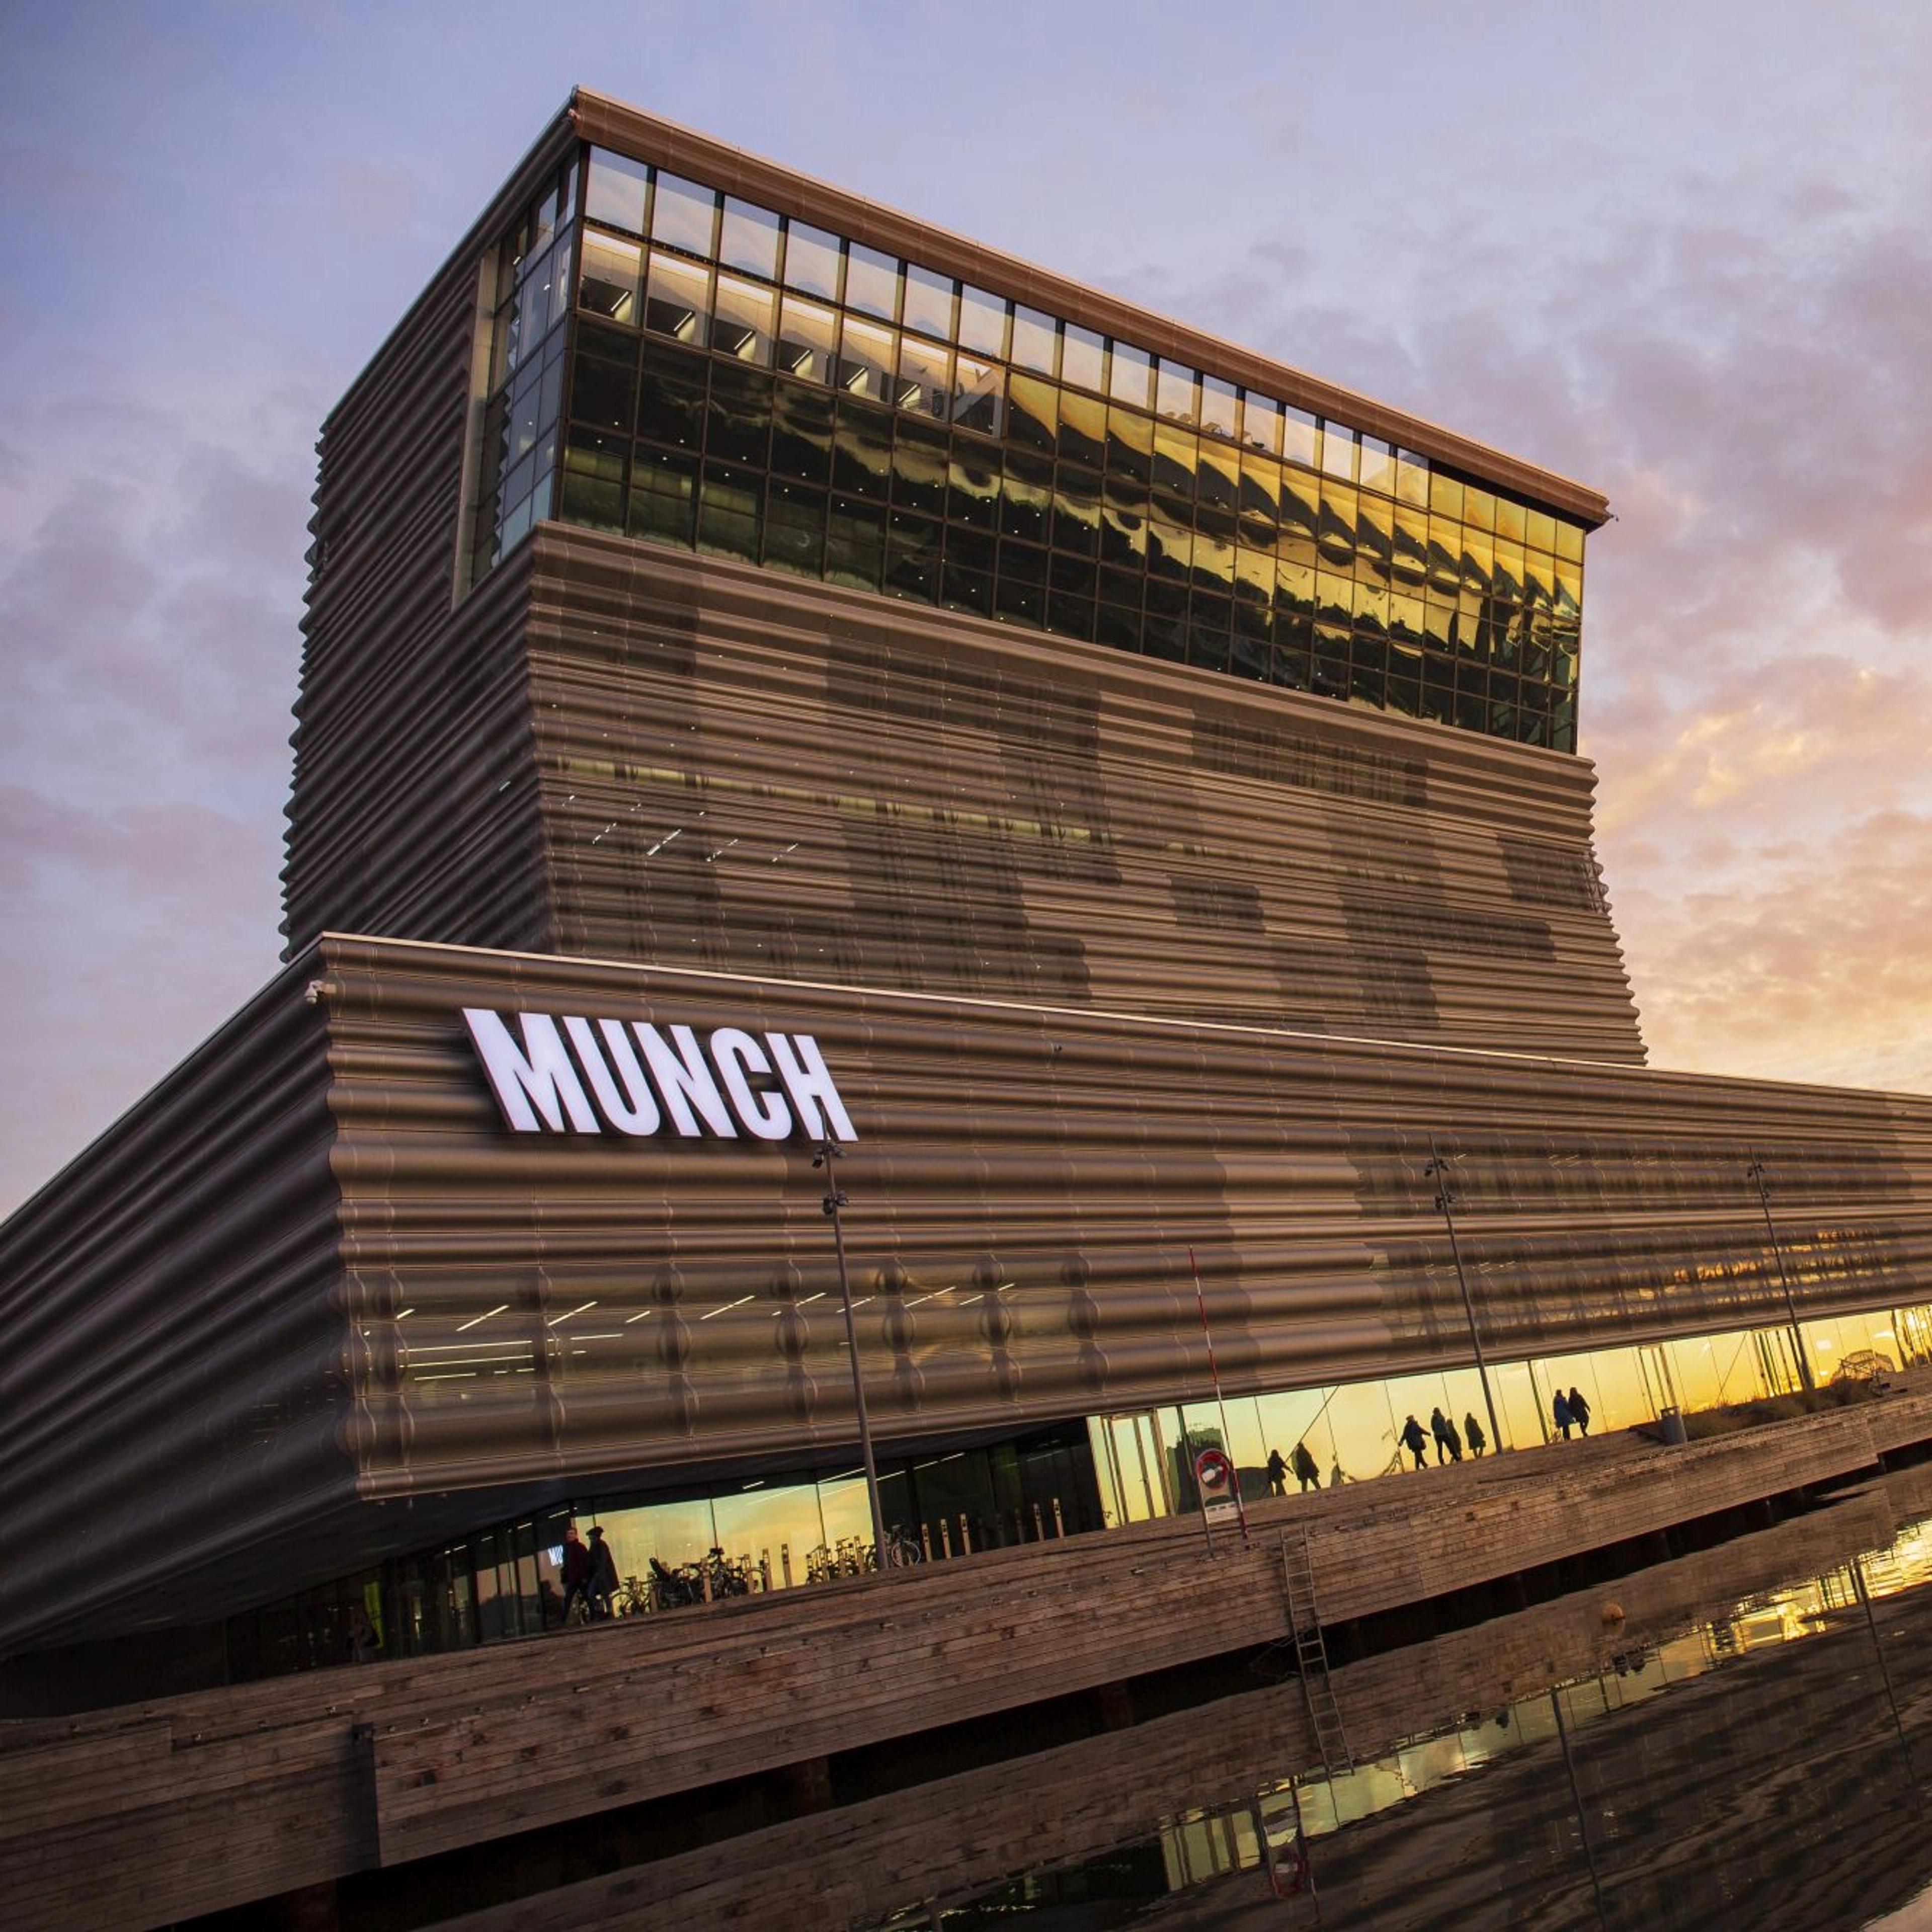 The Munch Museum - Oslo, Norway